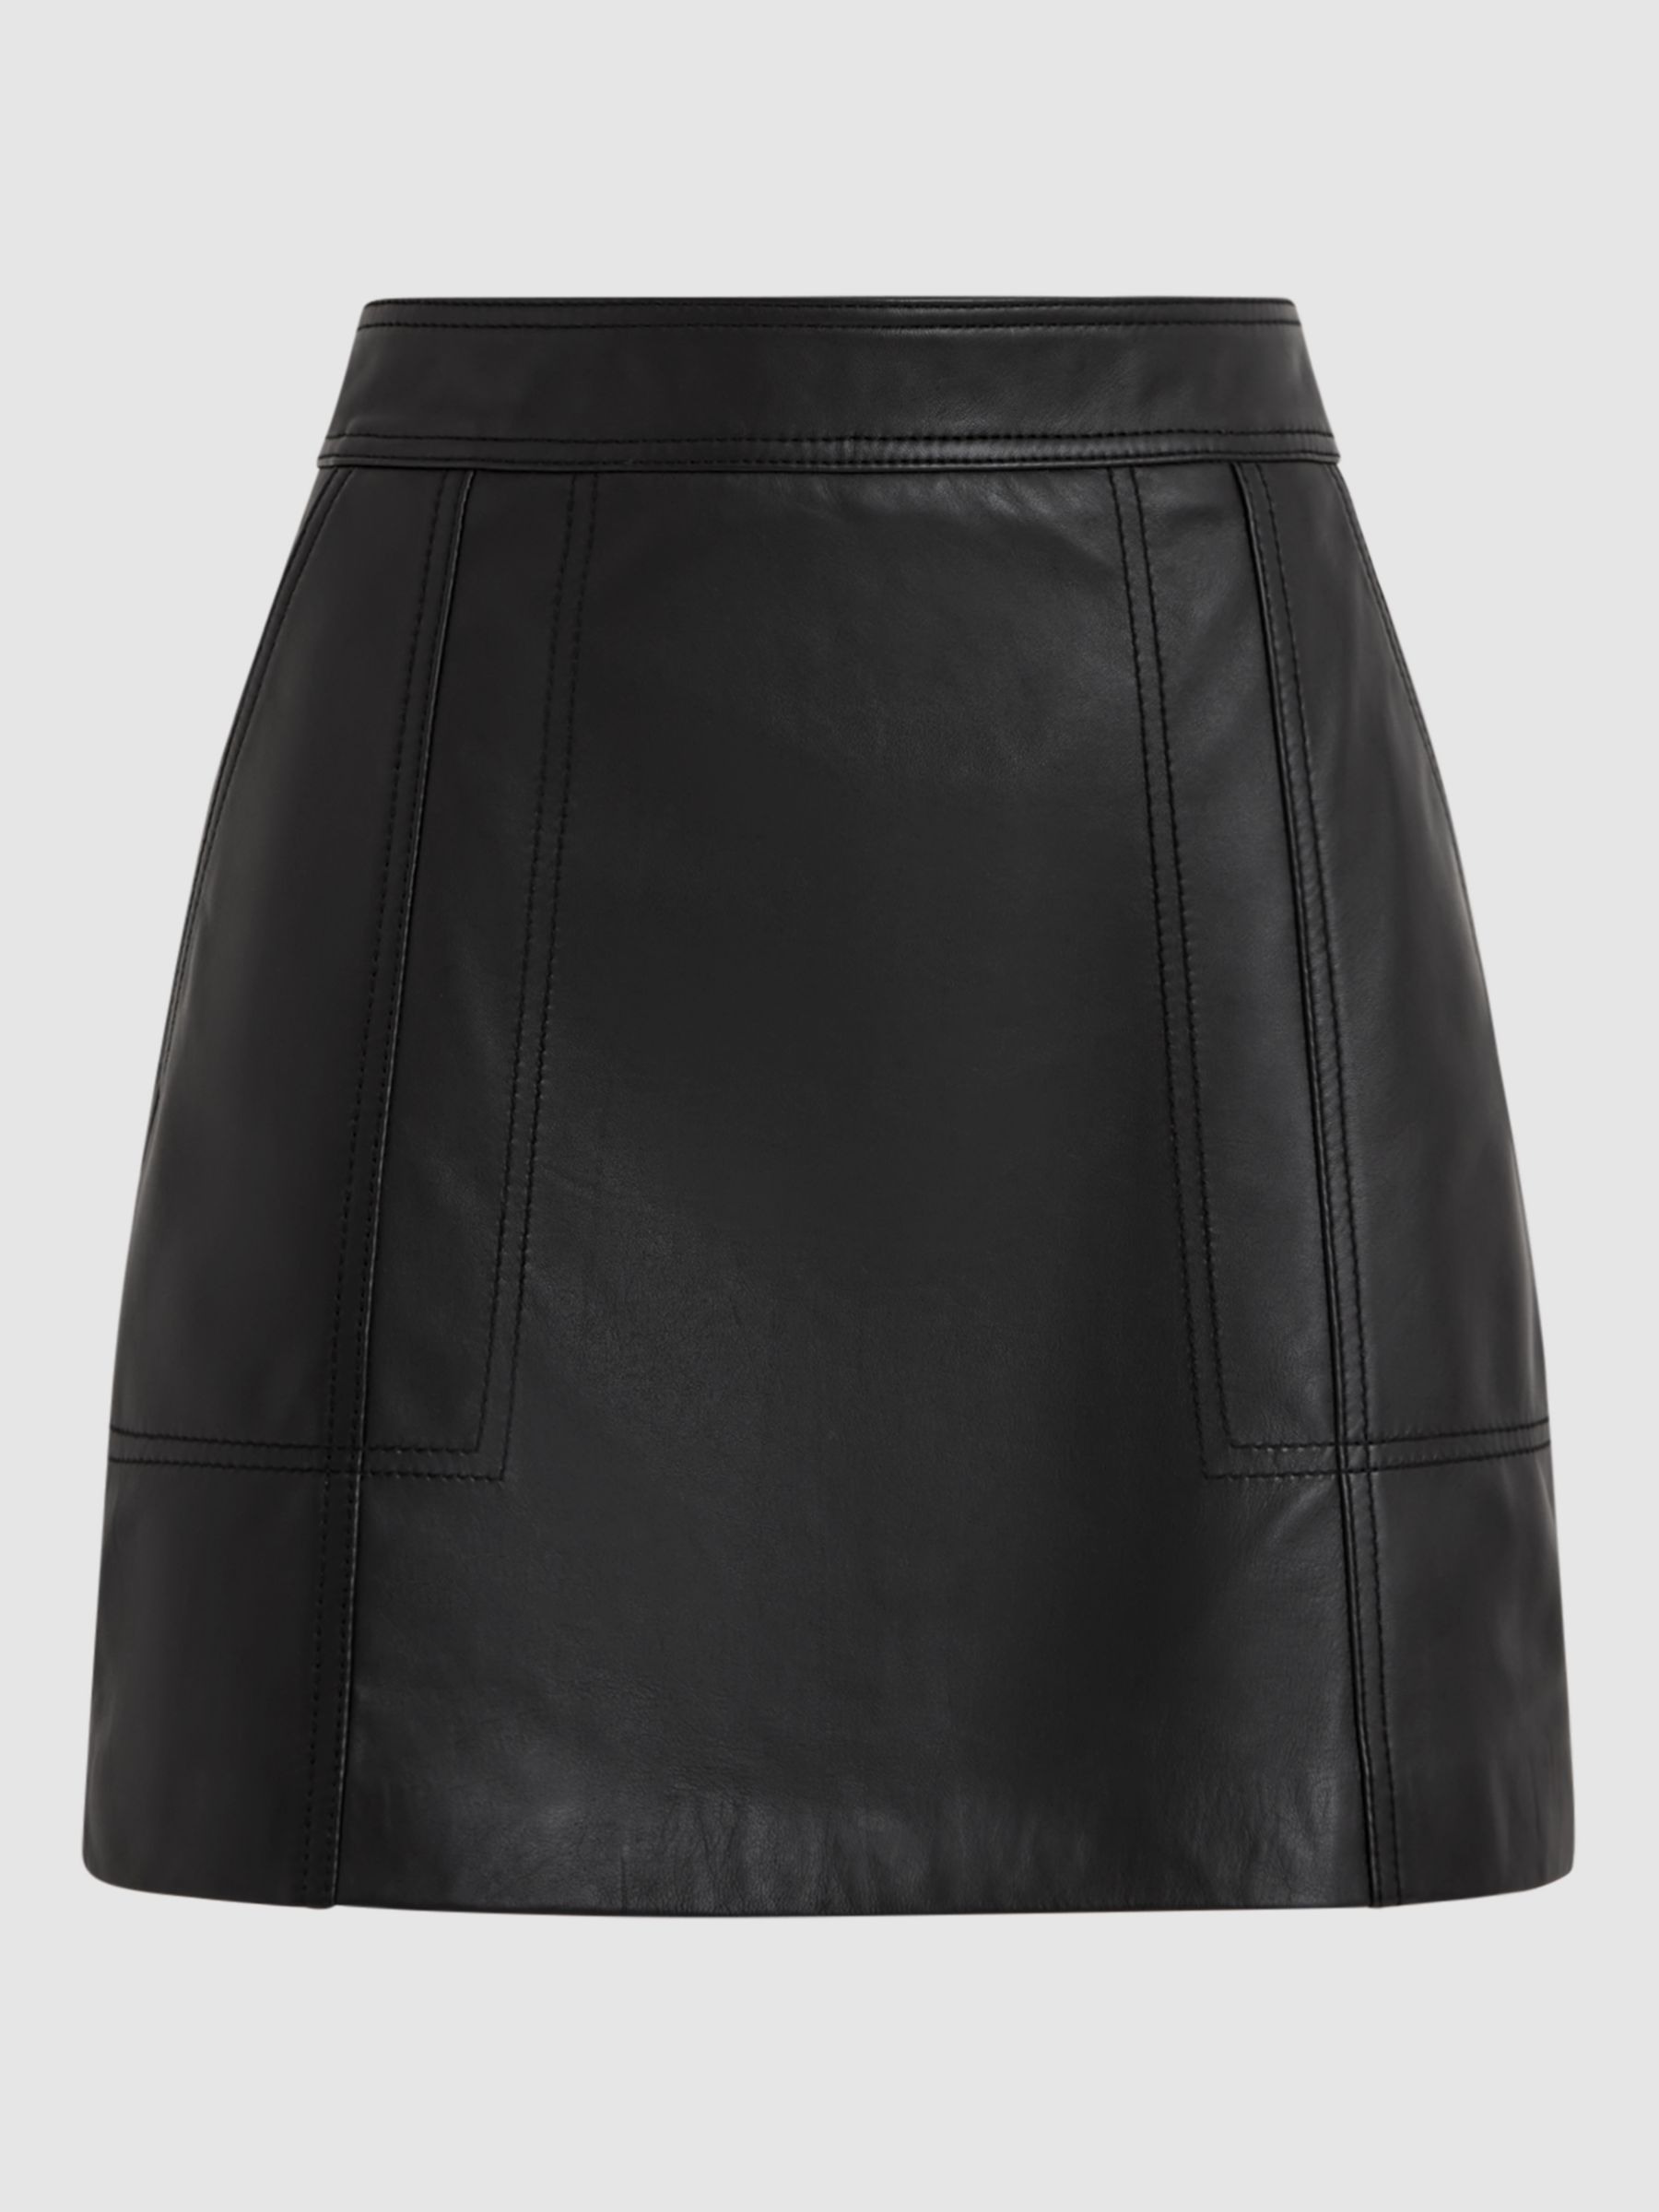 Reiss Edie High Waisted Leather Mini Skirt, Black at John Lewis & Partners